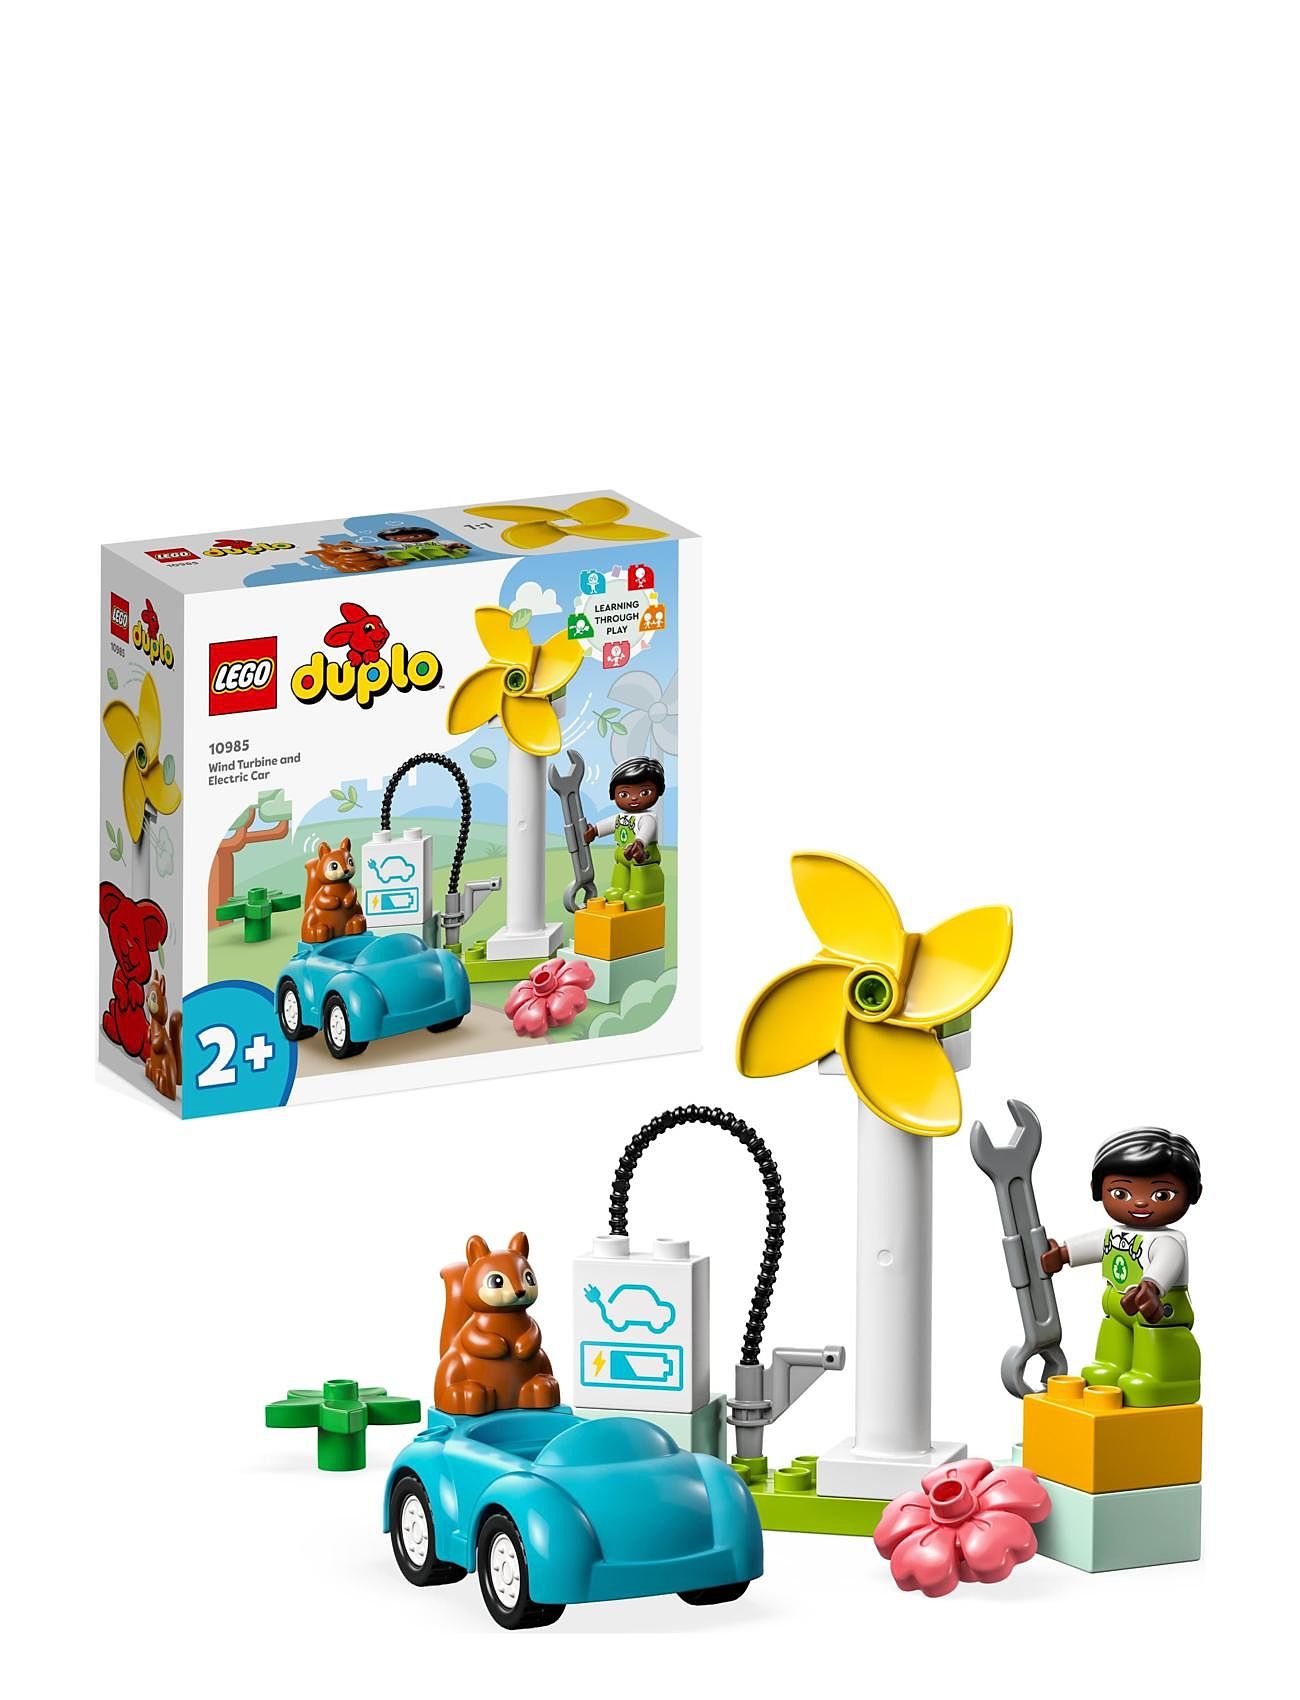 Wind Turbine And Electric Car Toddler Toy Toys Lego Toys Lego duplo Multi/patterned LEGO